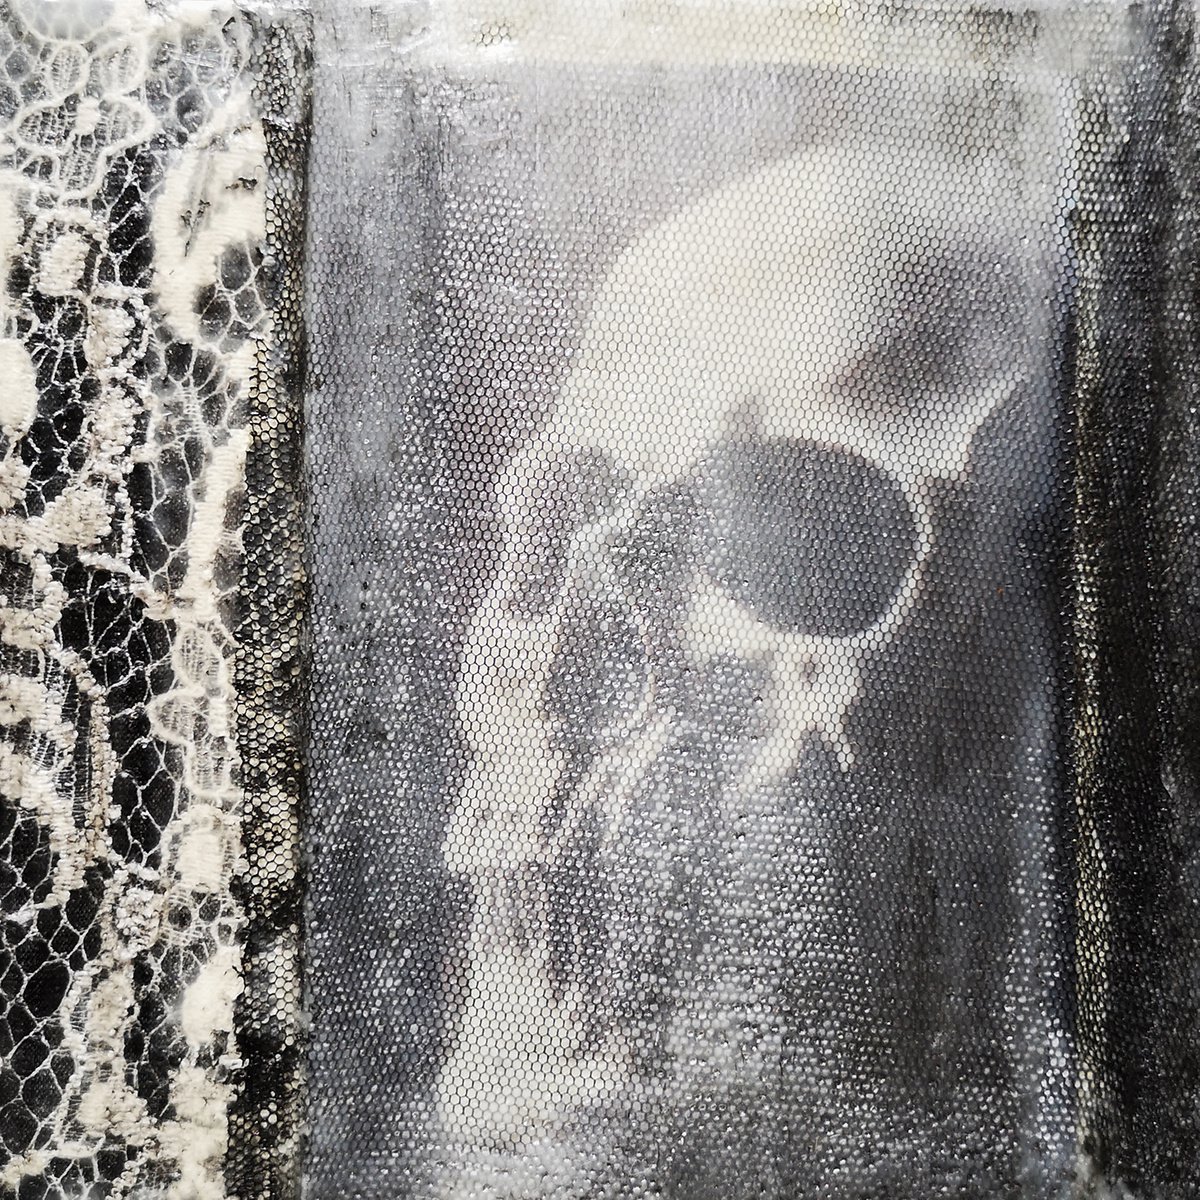 Grim Skull - ORIGINAL 6 x 6 Gothic Collage Art by Roseanne Jones by Roseanne Jones